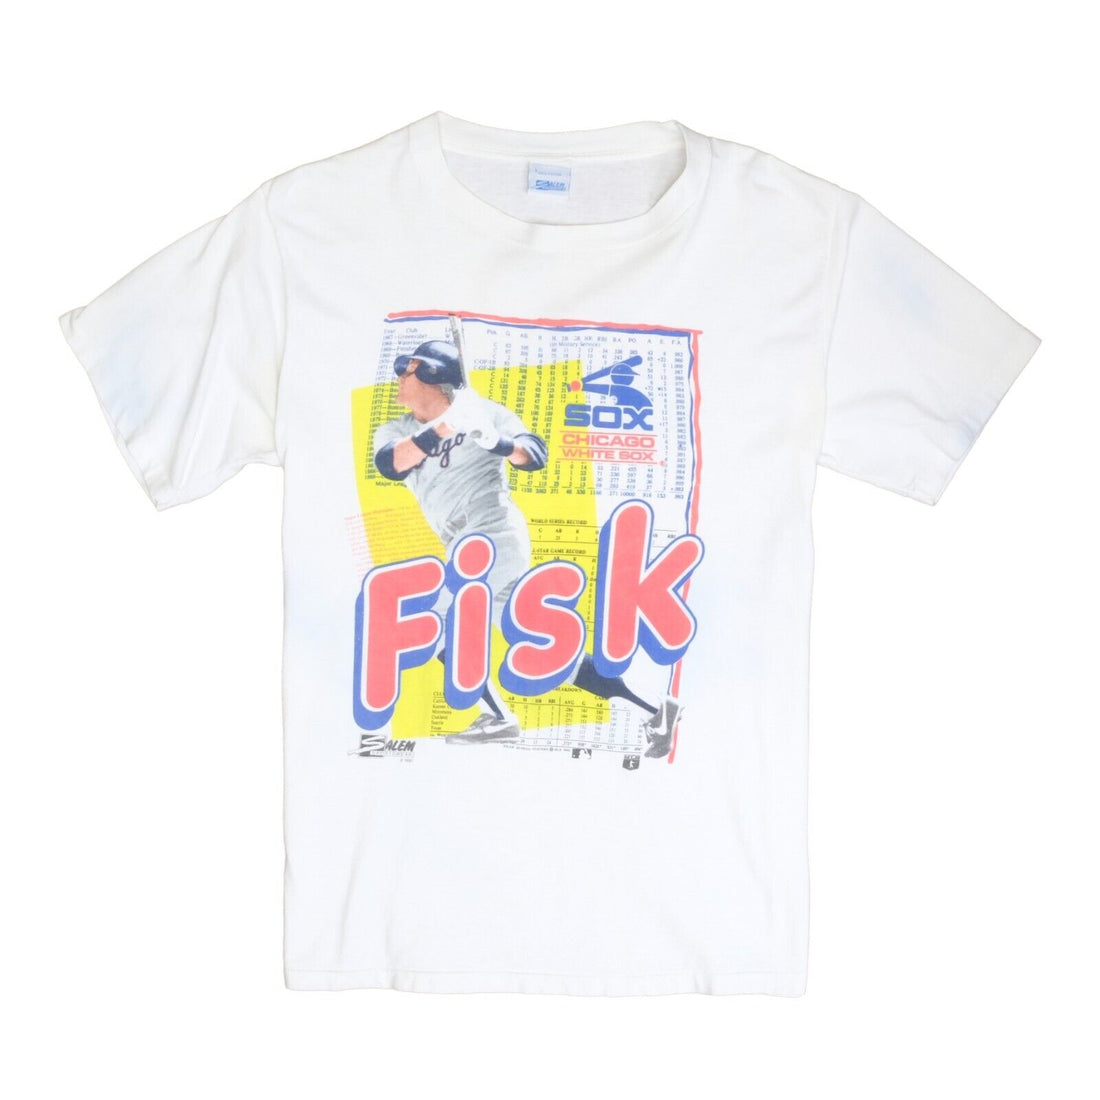 Vintage Chicago White Sox Carlton Fisk T-Shirt Size Large White